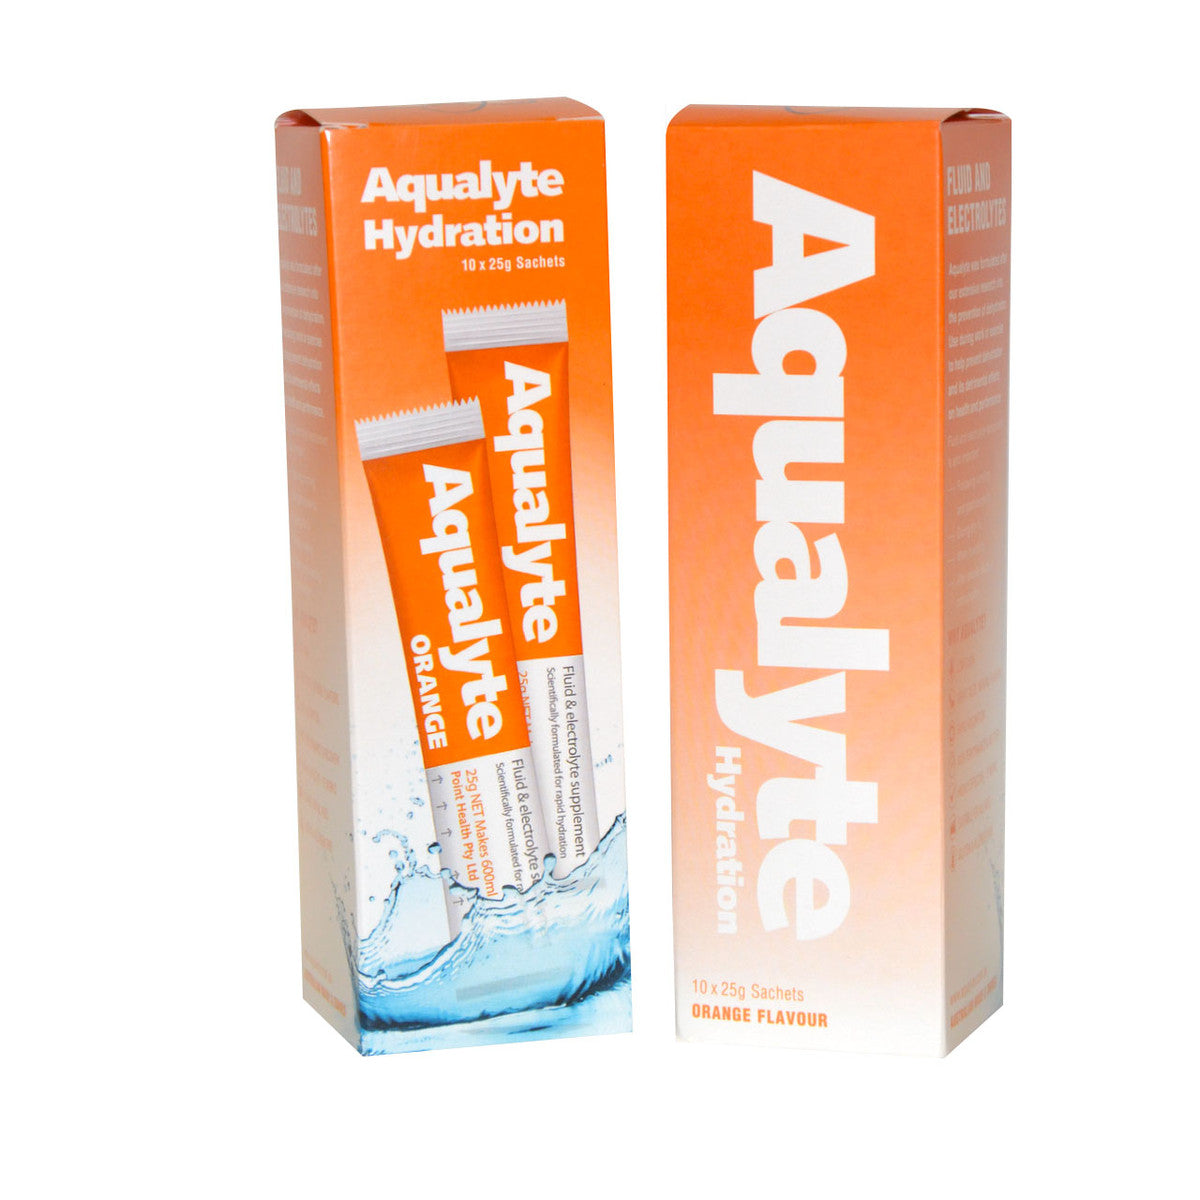 Aqualyte hydration drink 10 x 25g sachets Orange